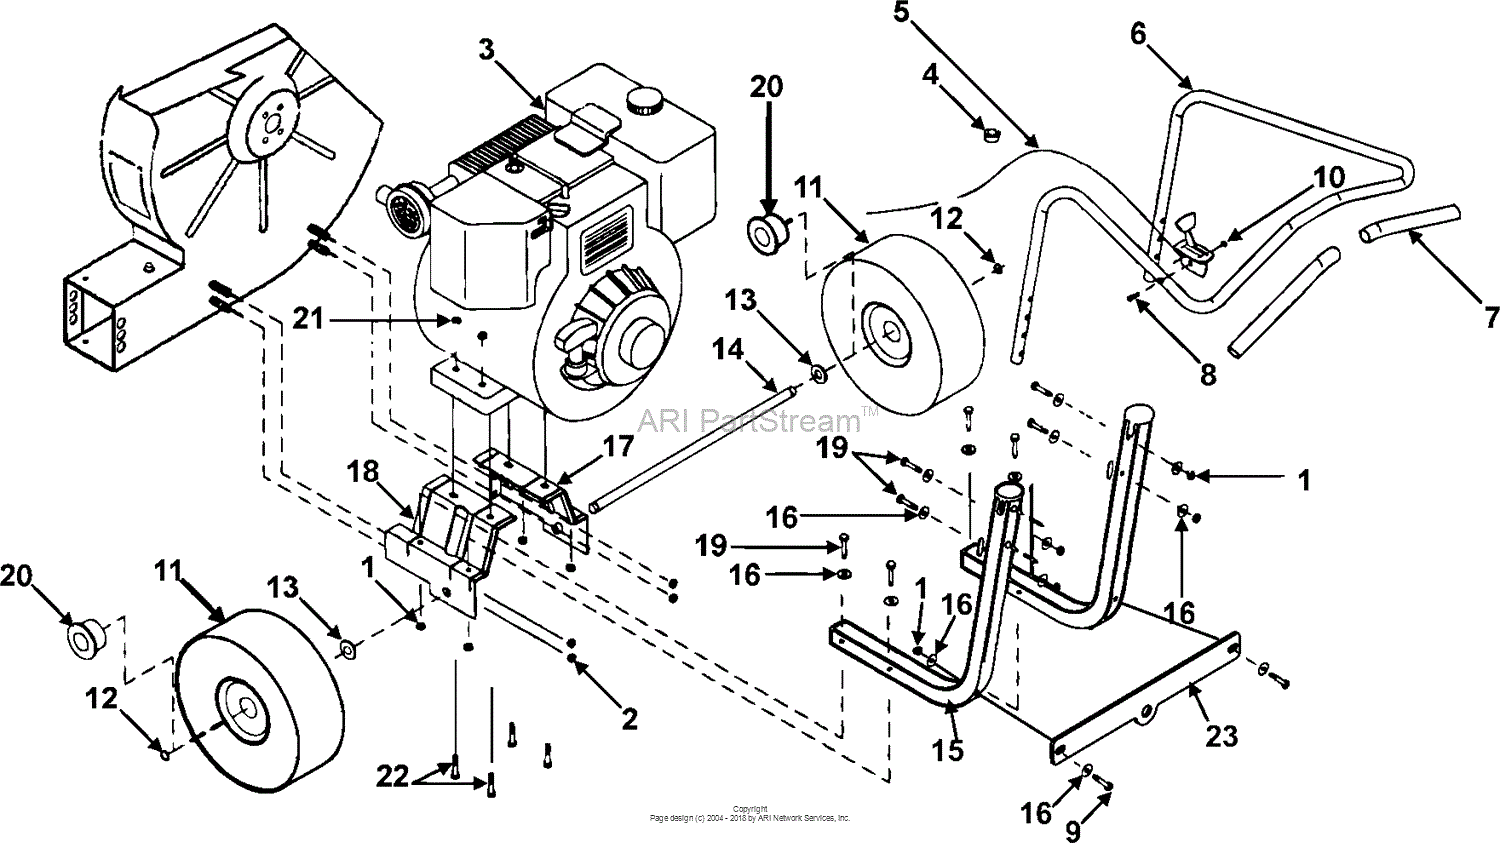 Bunton, Bobcat, Ryan LB901-00-01 Optimax Blower 9hp Subaru ... little wonder engine diagrams 